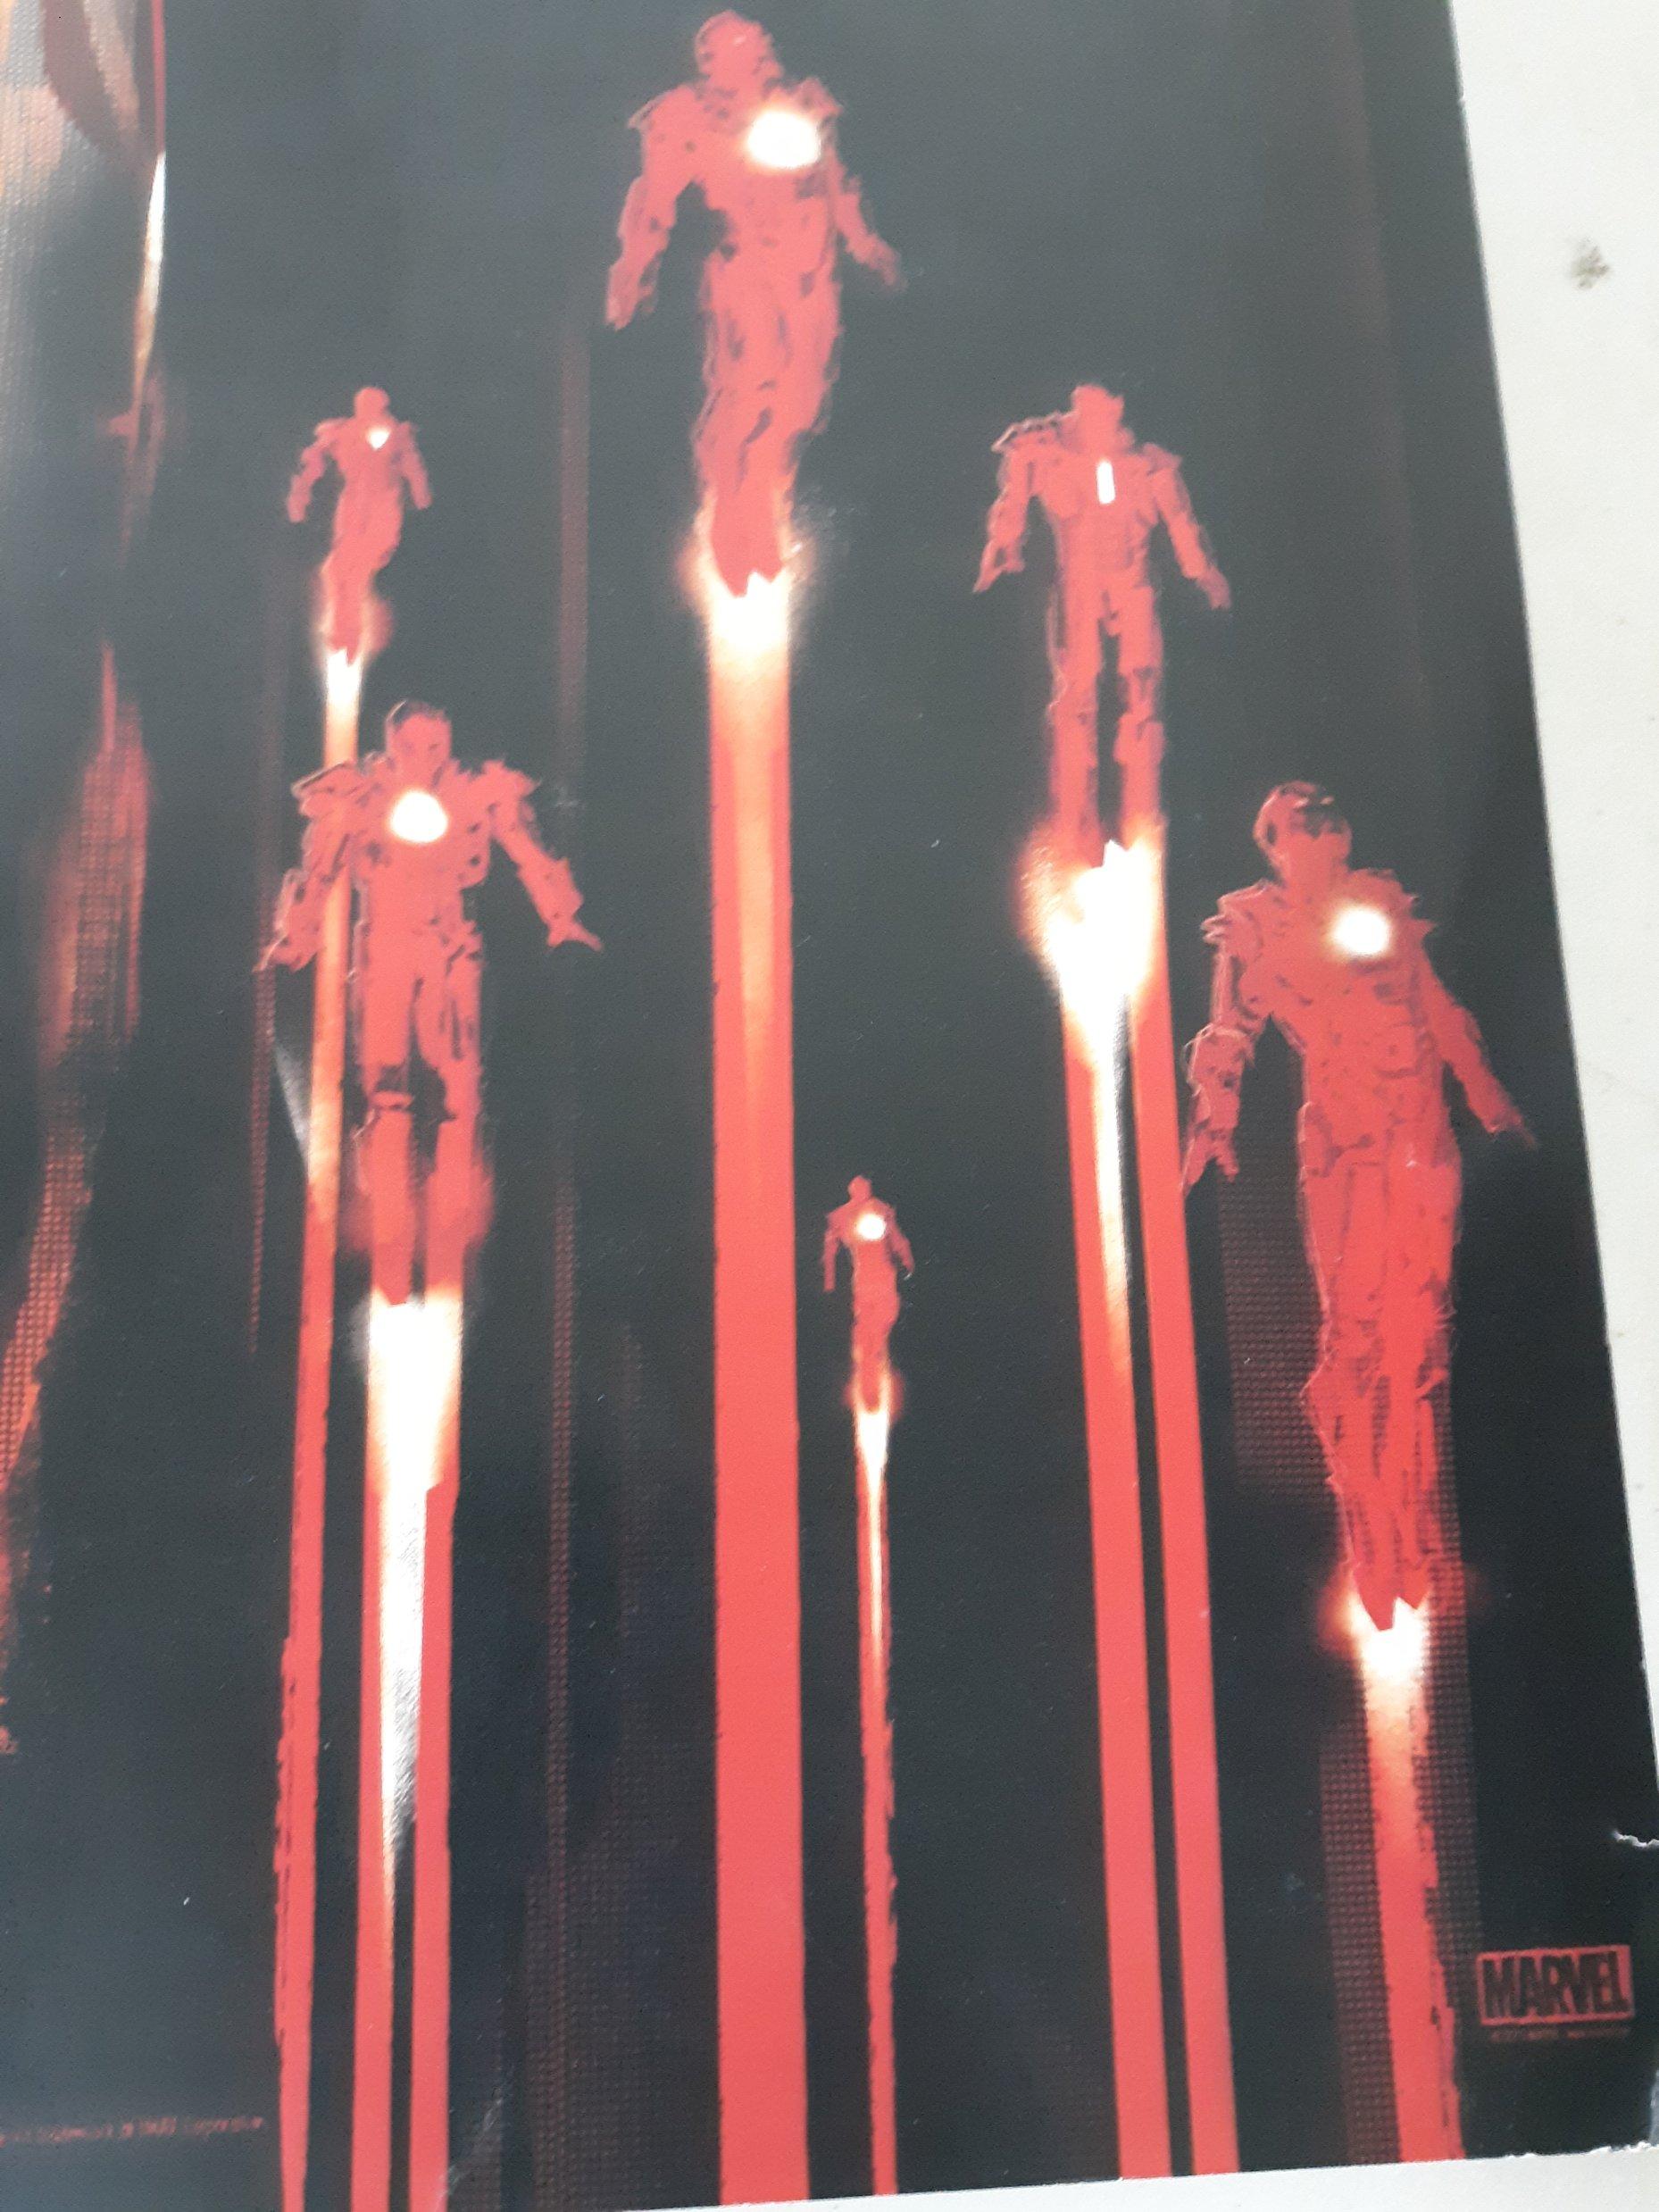 IMAX Movie Poster Iron Man 3